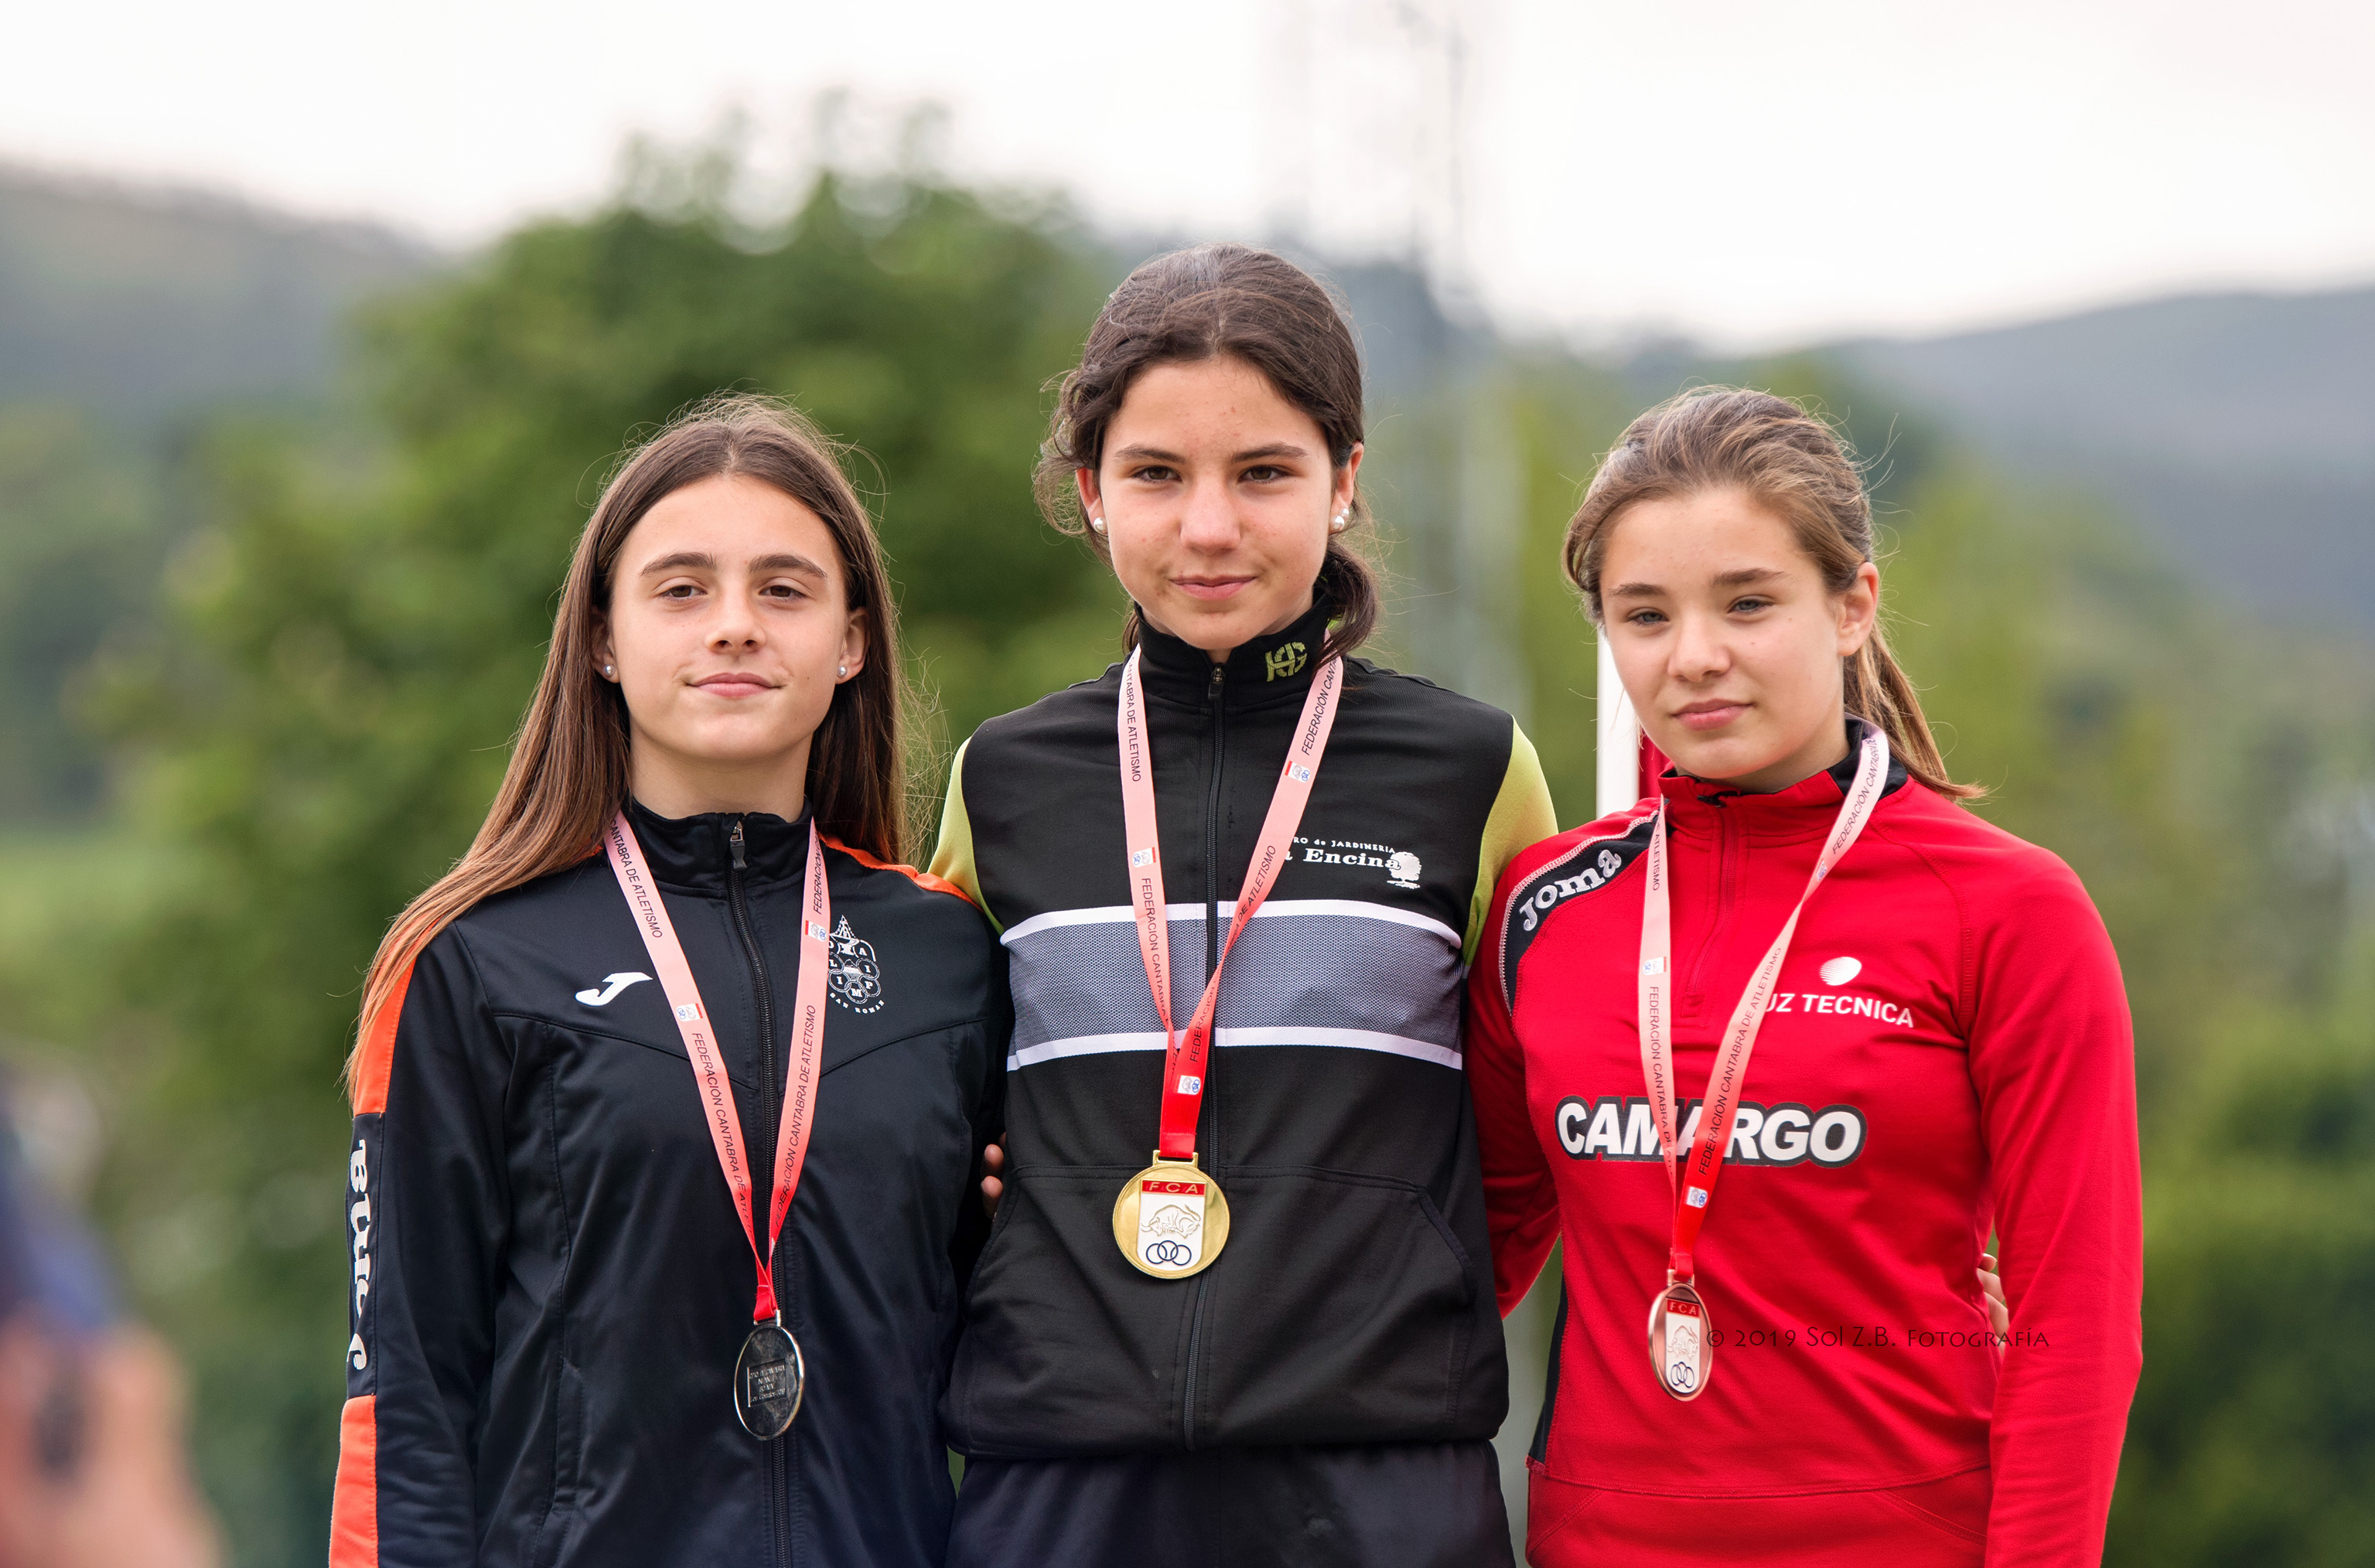 z 11-05-2019 Campeonato podium 03 srf